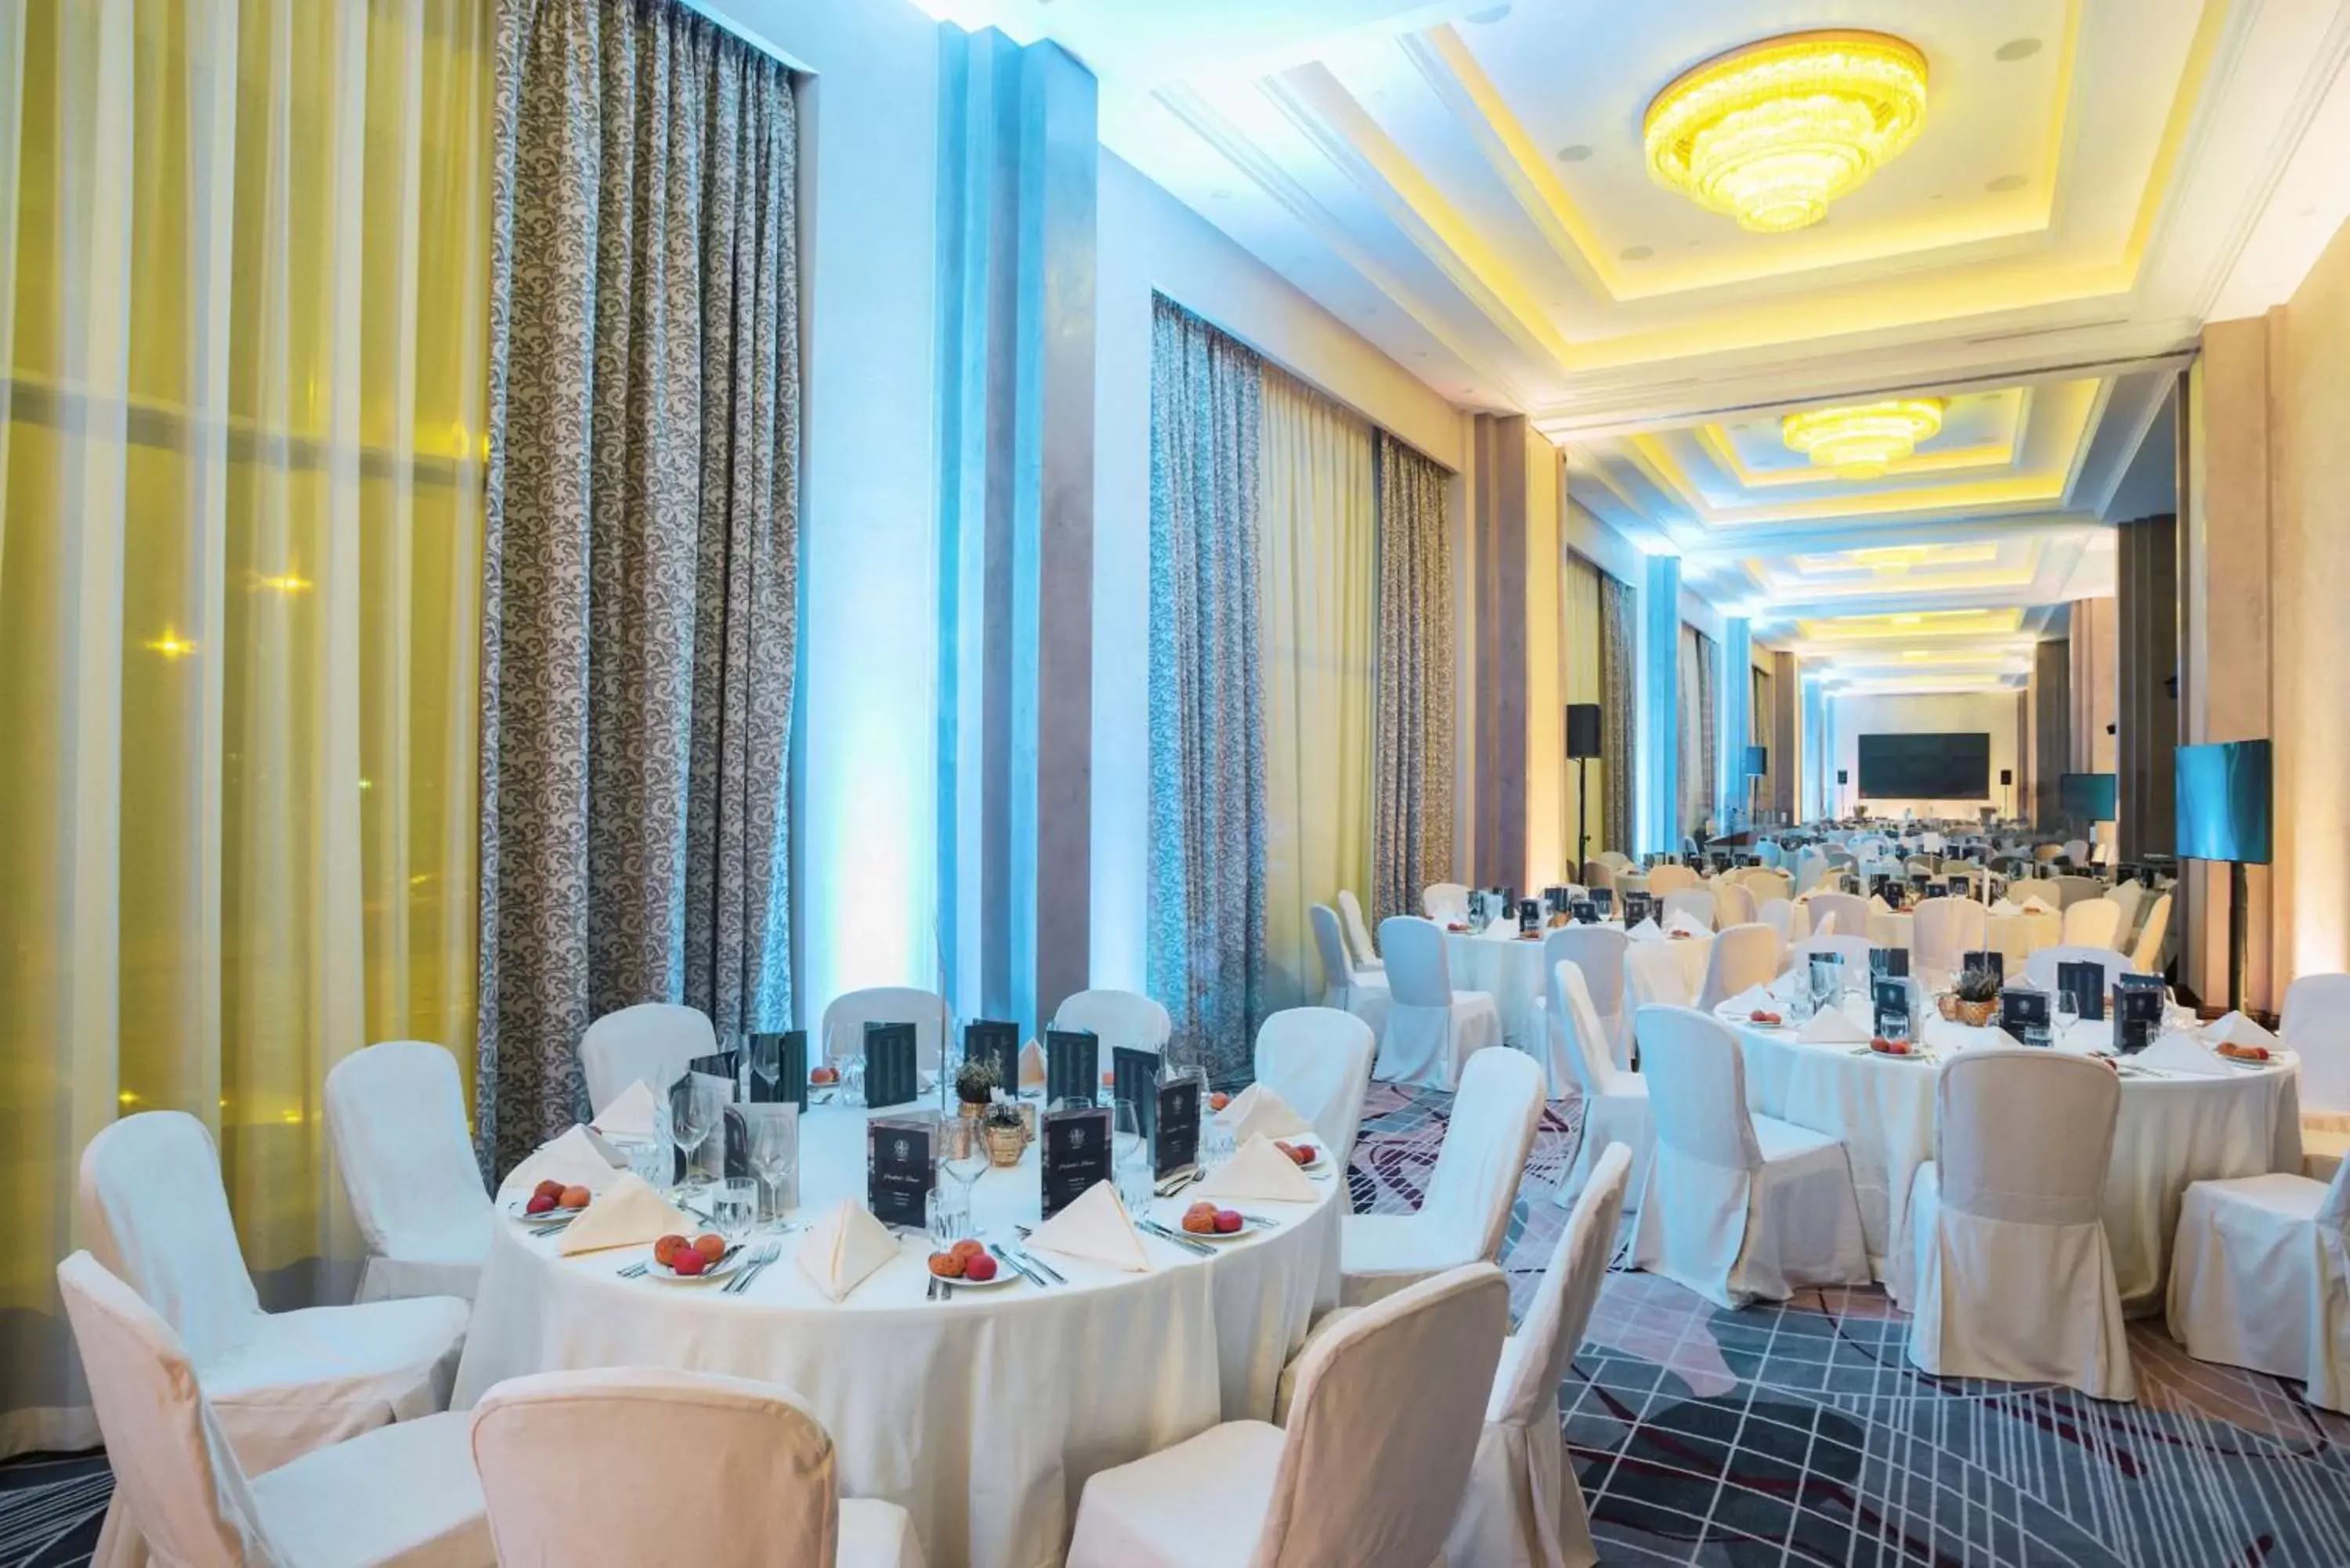 Banquet/Function facilities, Banquet Facilities in Grand Hotel Kempinski Riga